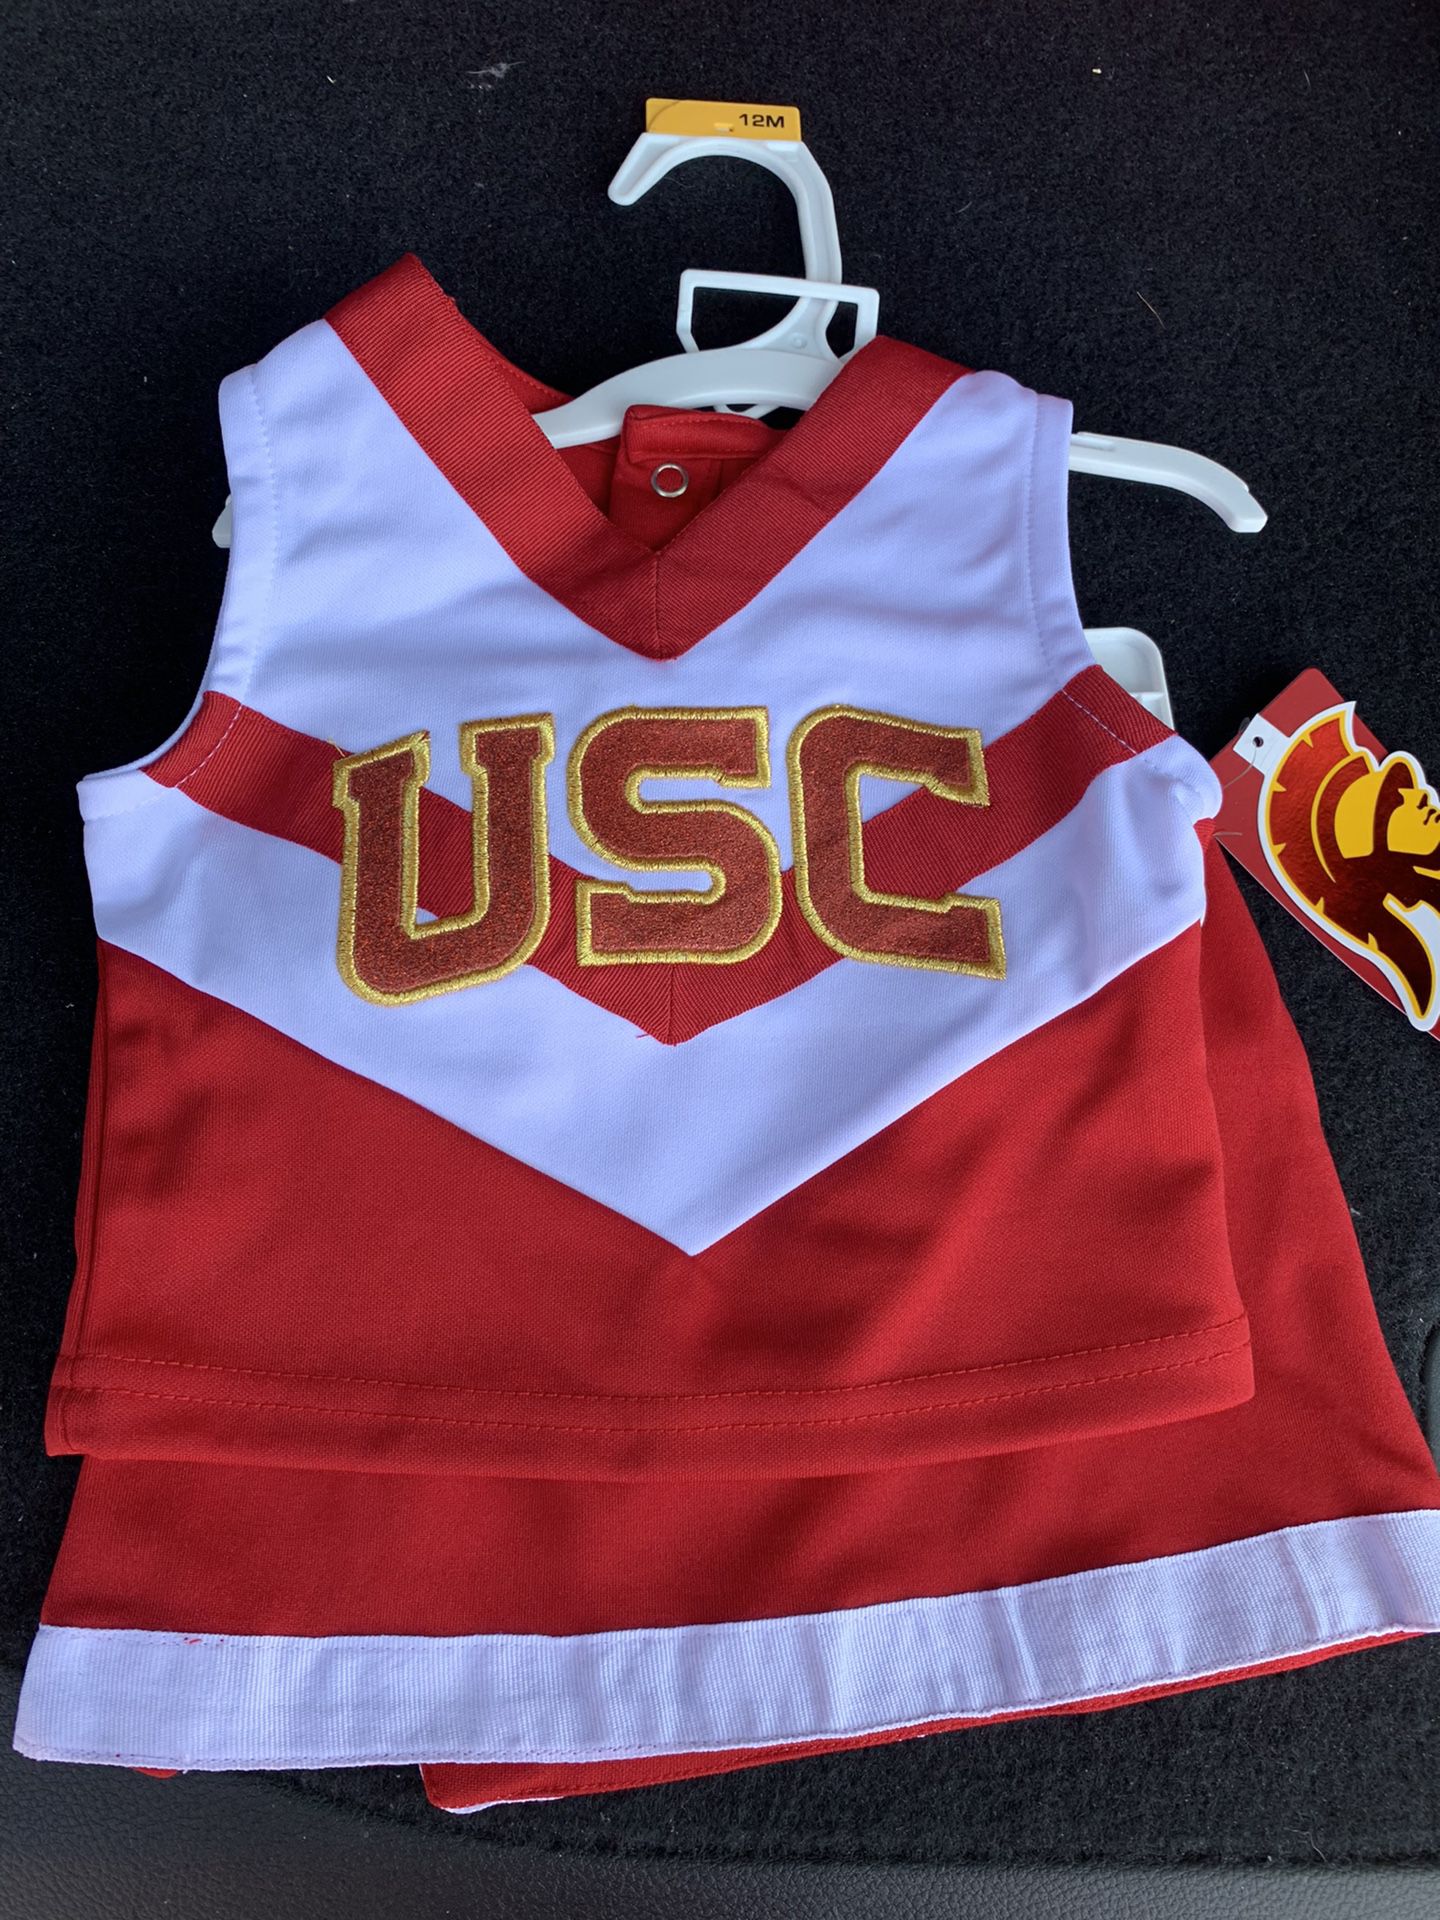 Cheerleader USC College Girls Toddler Outfit Shirt & Skirt Size 12 months